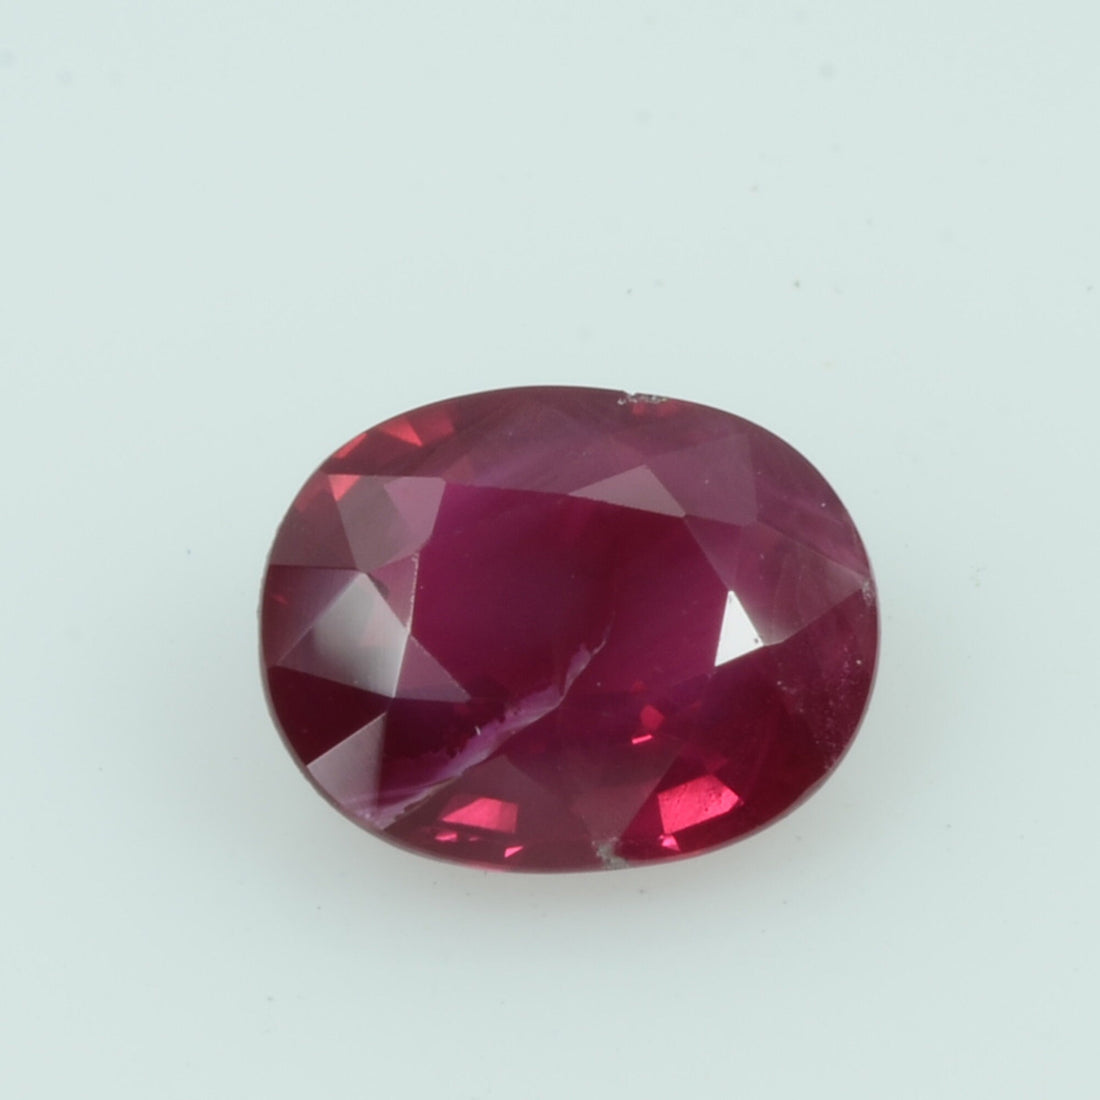 1.05 Cts Natural Burma Ruby Loose Gemstone Oval Cut